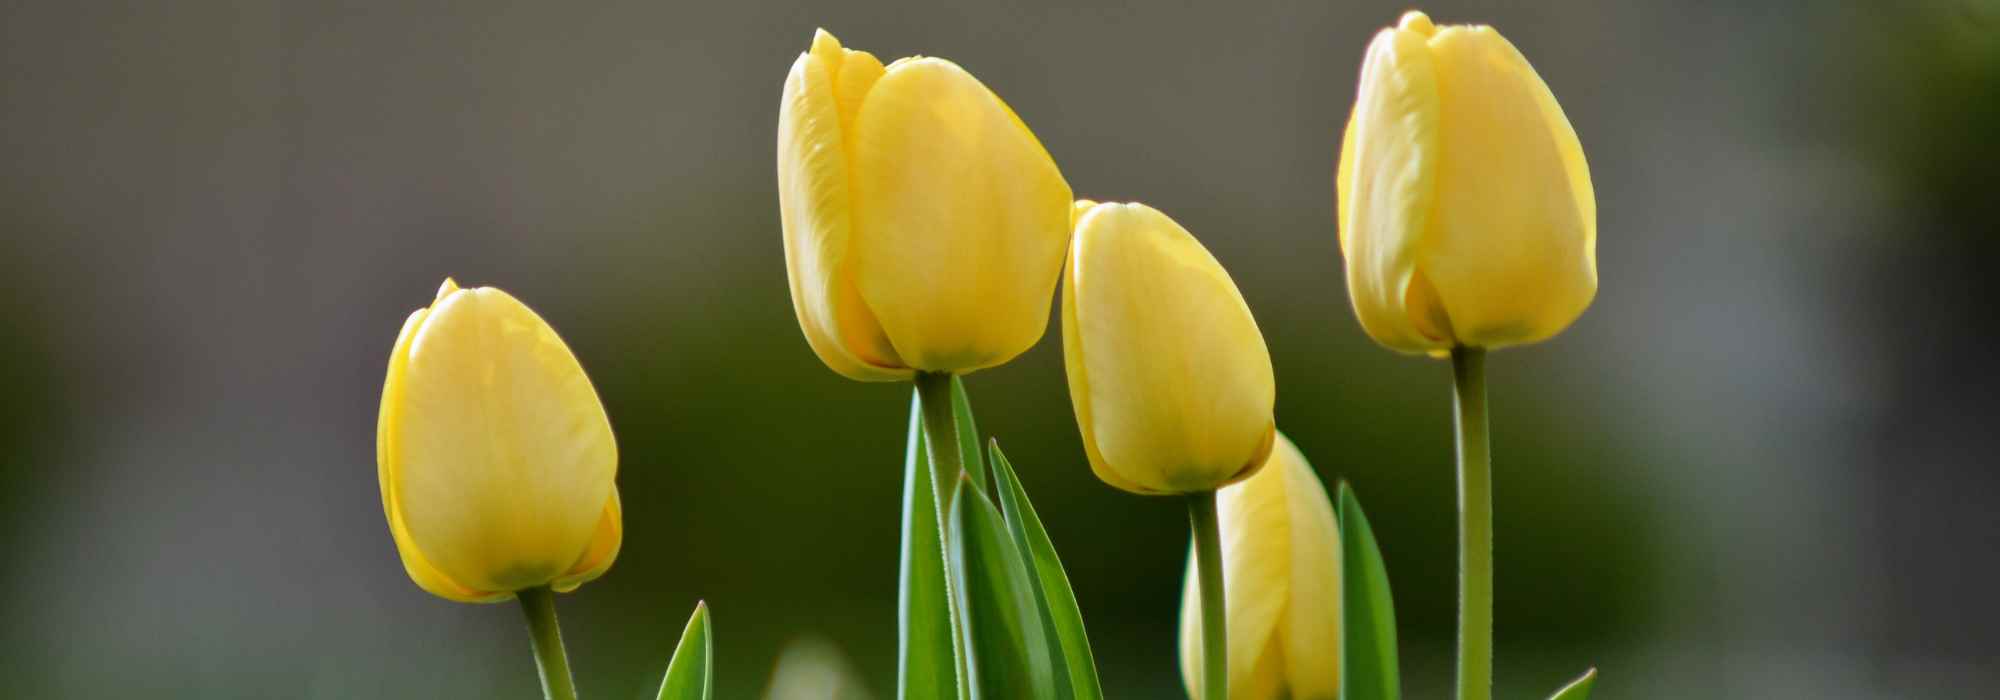 7 tulipes à fleurs jaunes